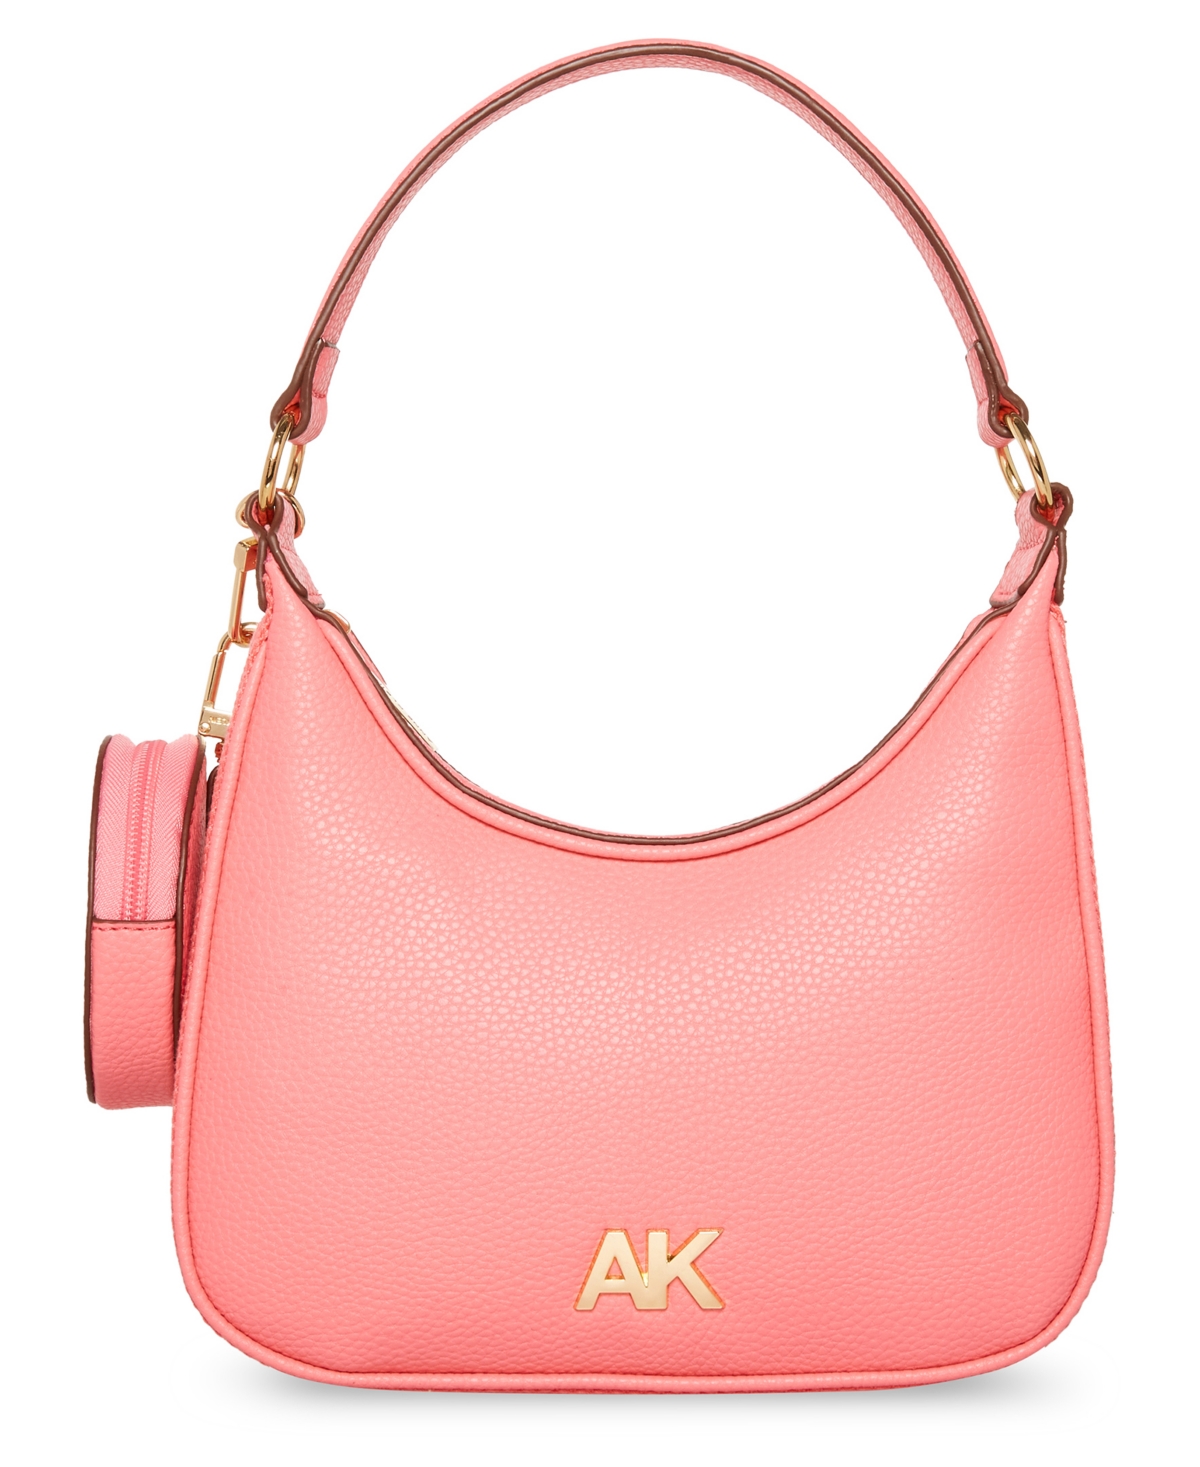 Anne Klein AK Horsebit Wristlet Pouch with Floral Overlay, Cream-Brown  Multi/Vintage Pink: Handbags